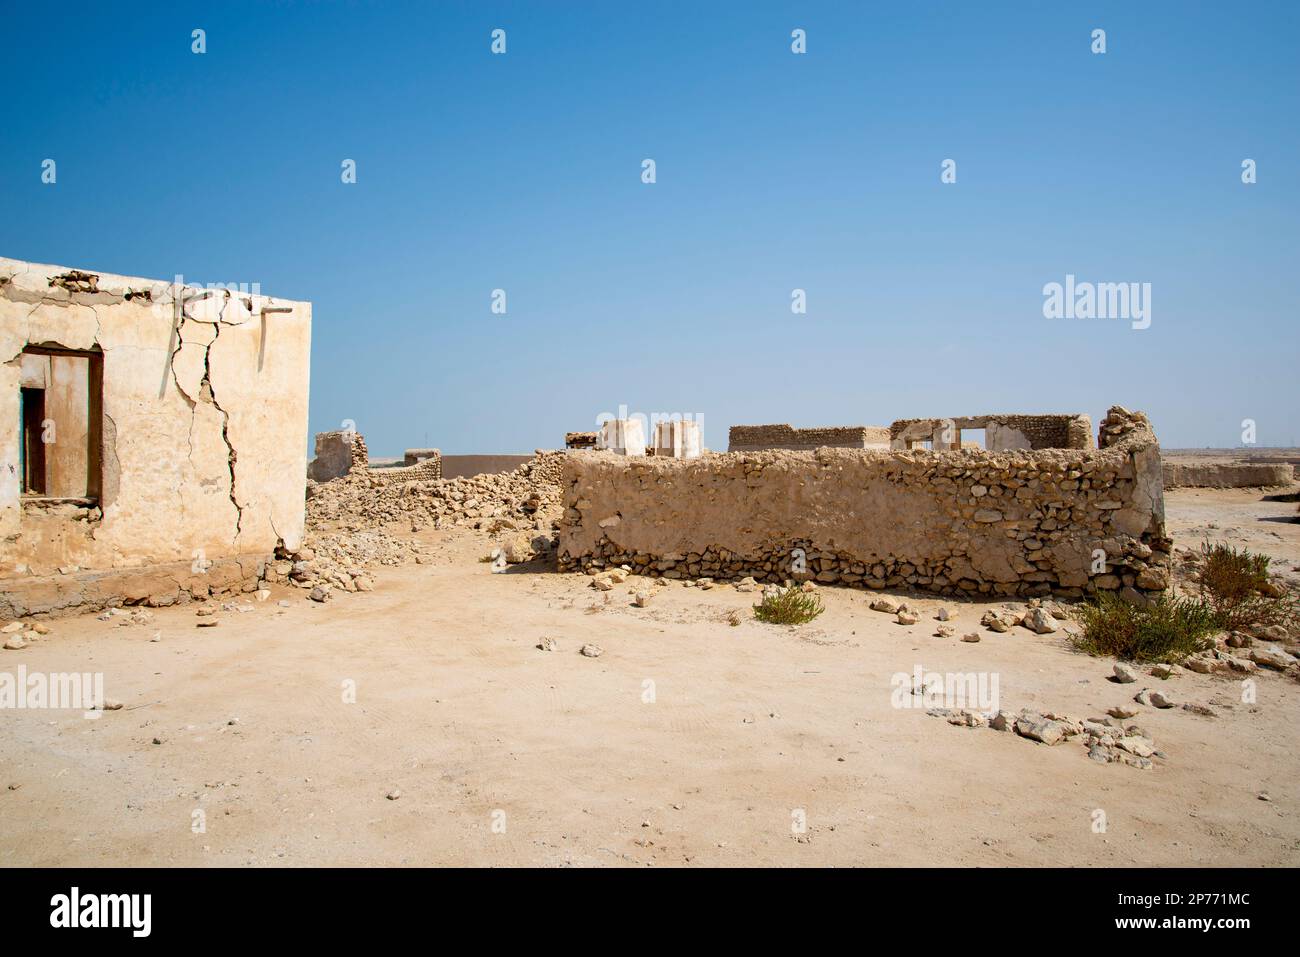 Al Jumail Abandoned Pearling and Fishing Village - Qatar Stock Photo